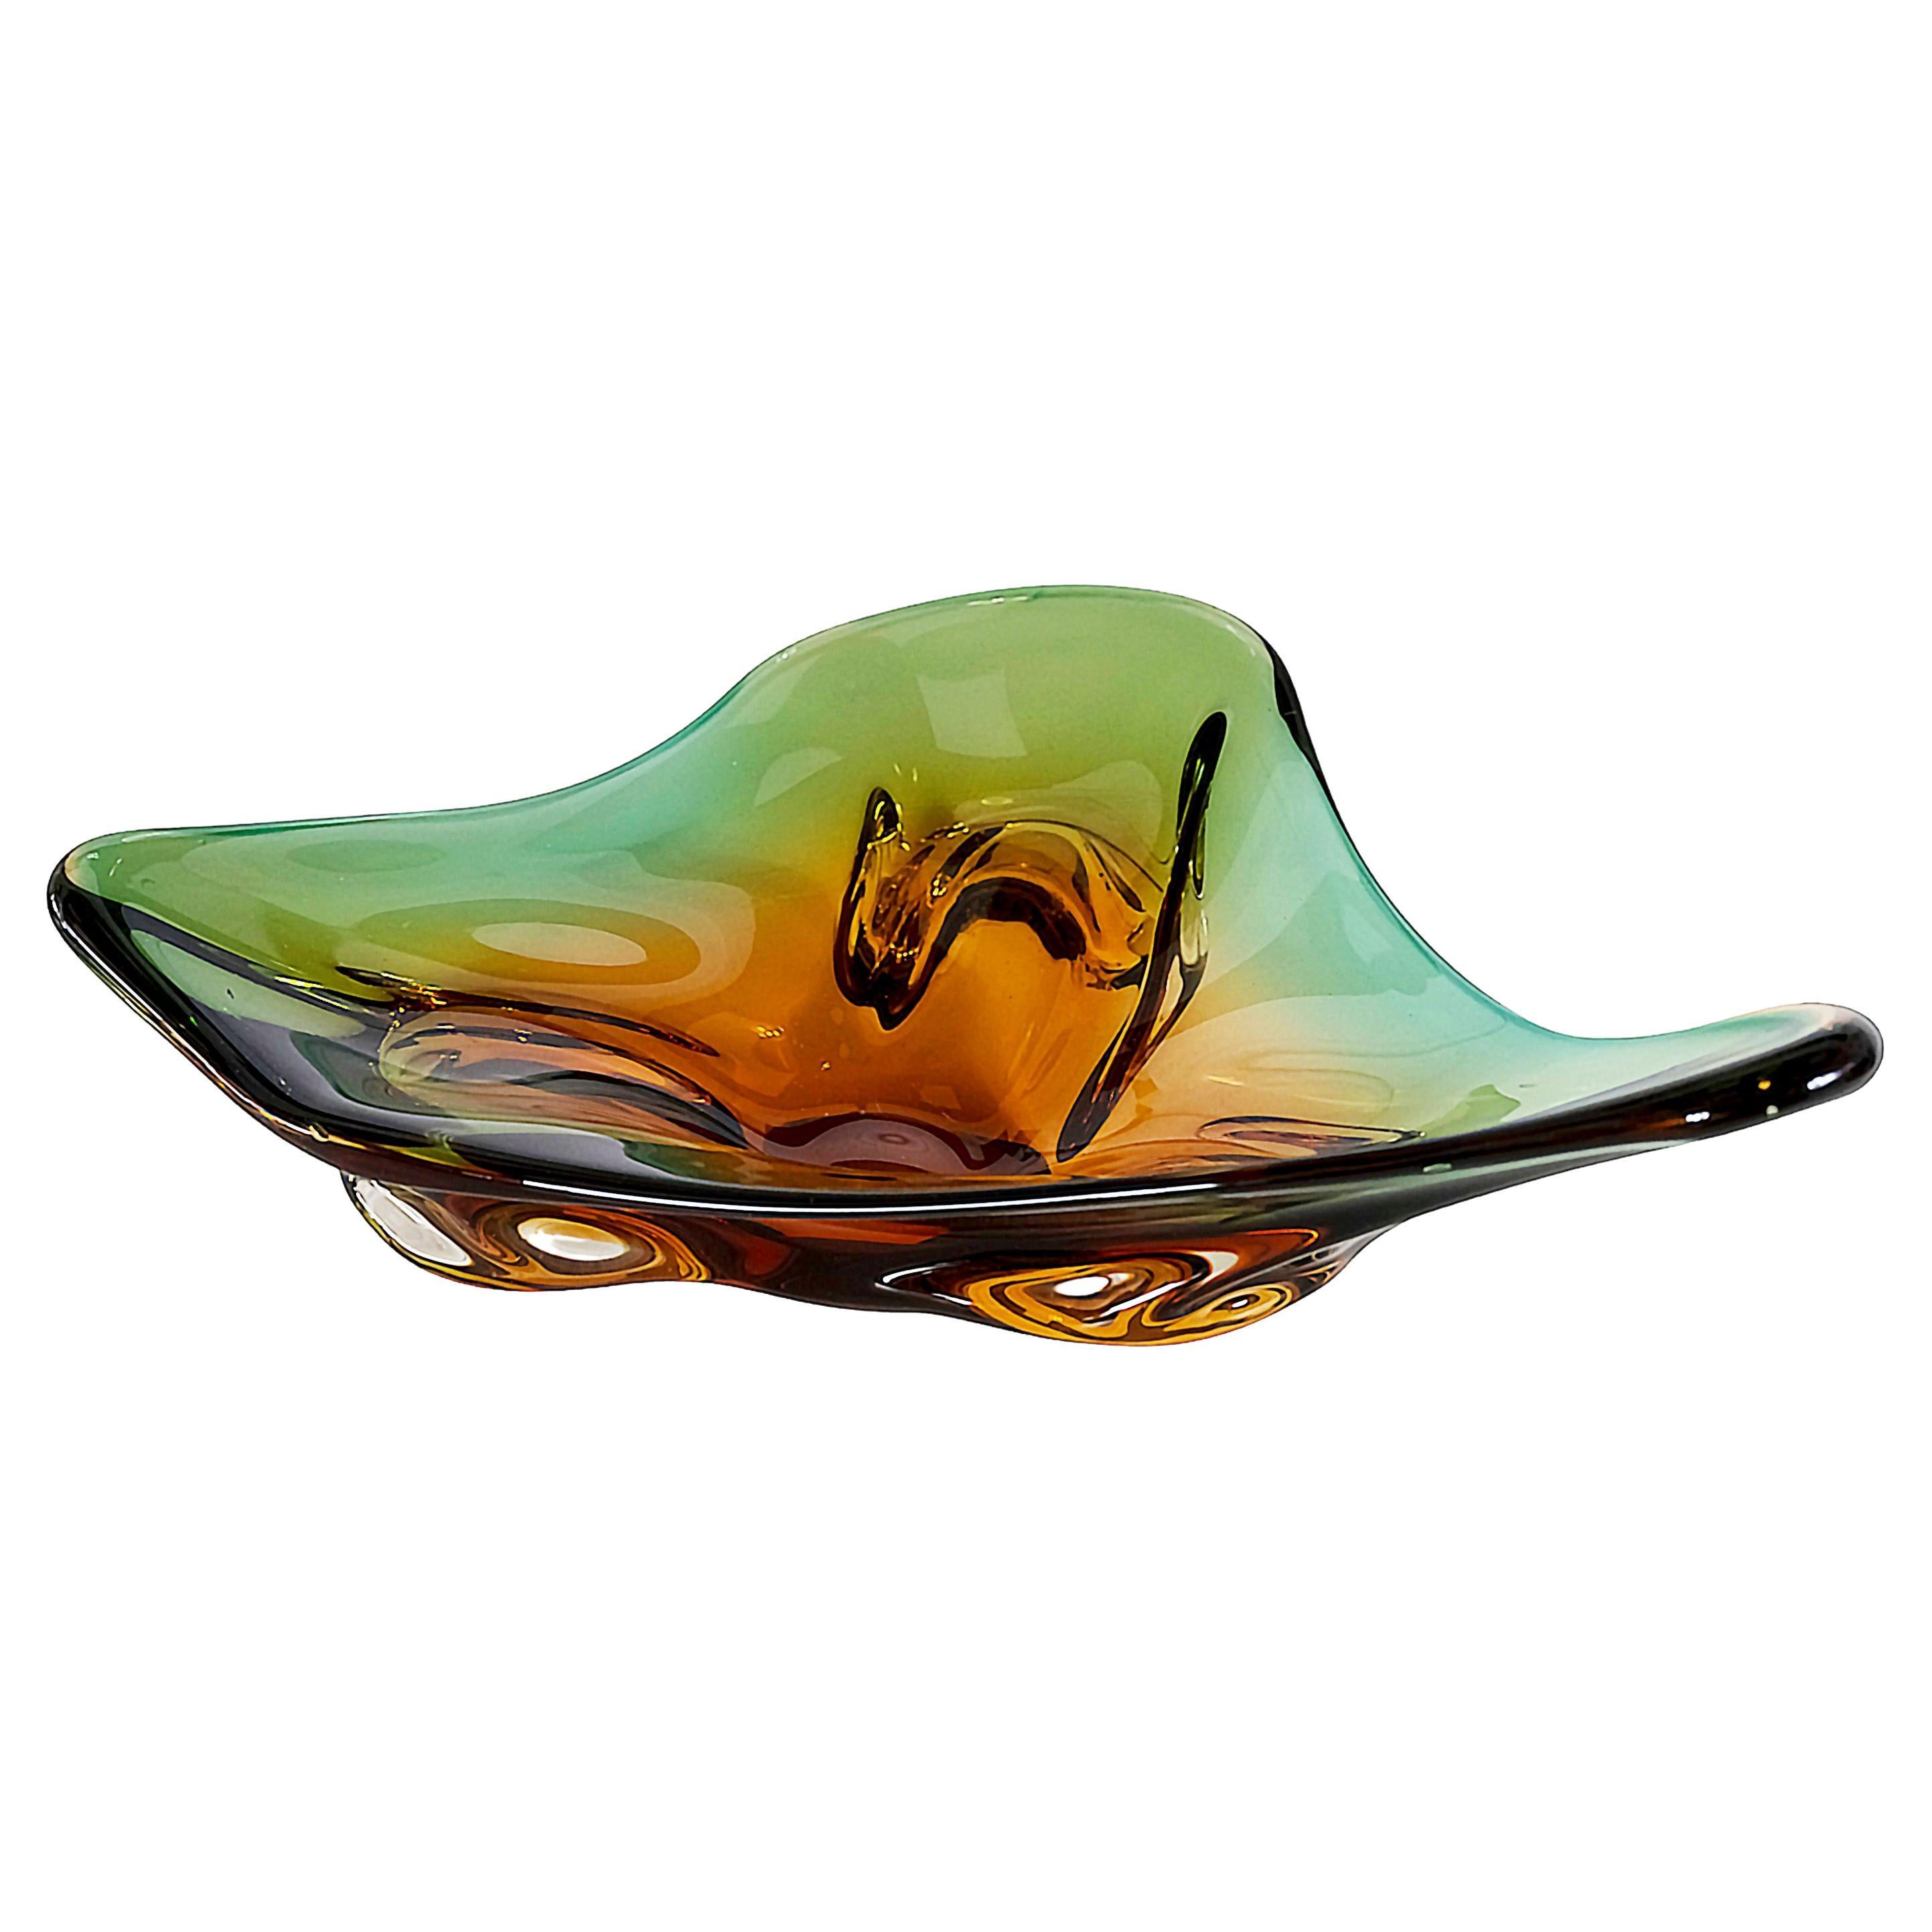 Vintage Italian Handmade Murano Glass Vase / Centerpiece For Sale